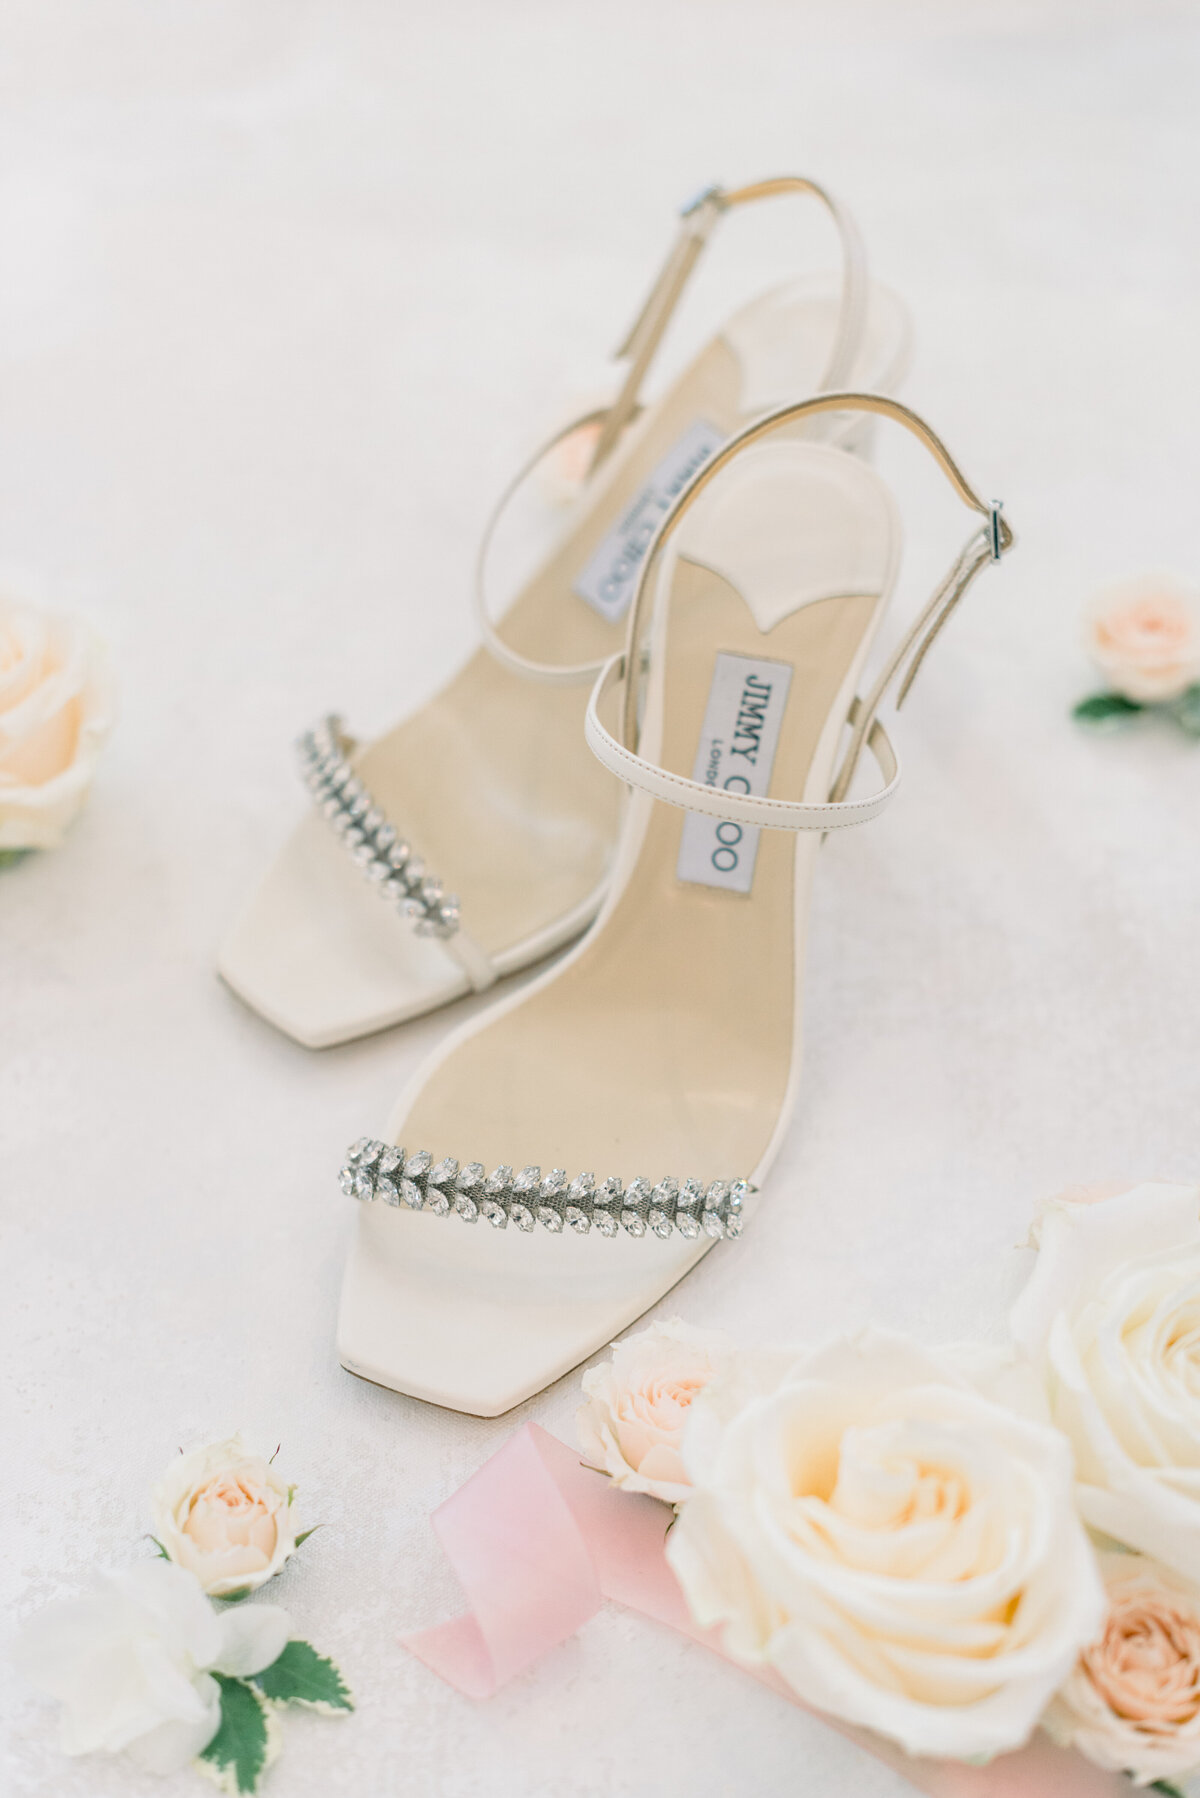 Jimmy Choo bridal wedding shoes.